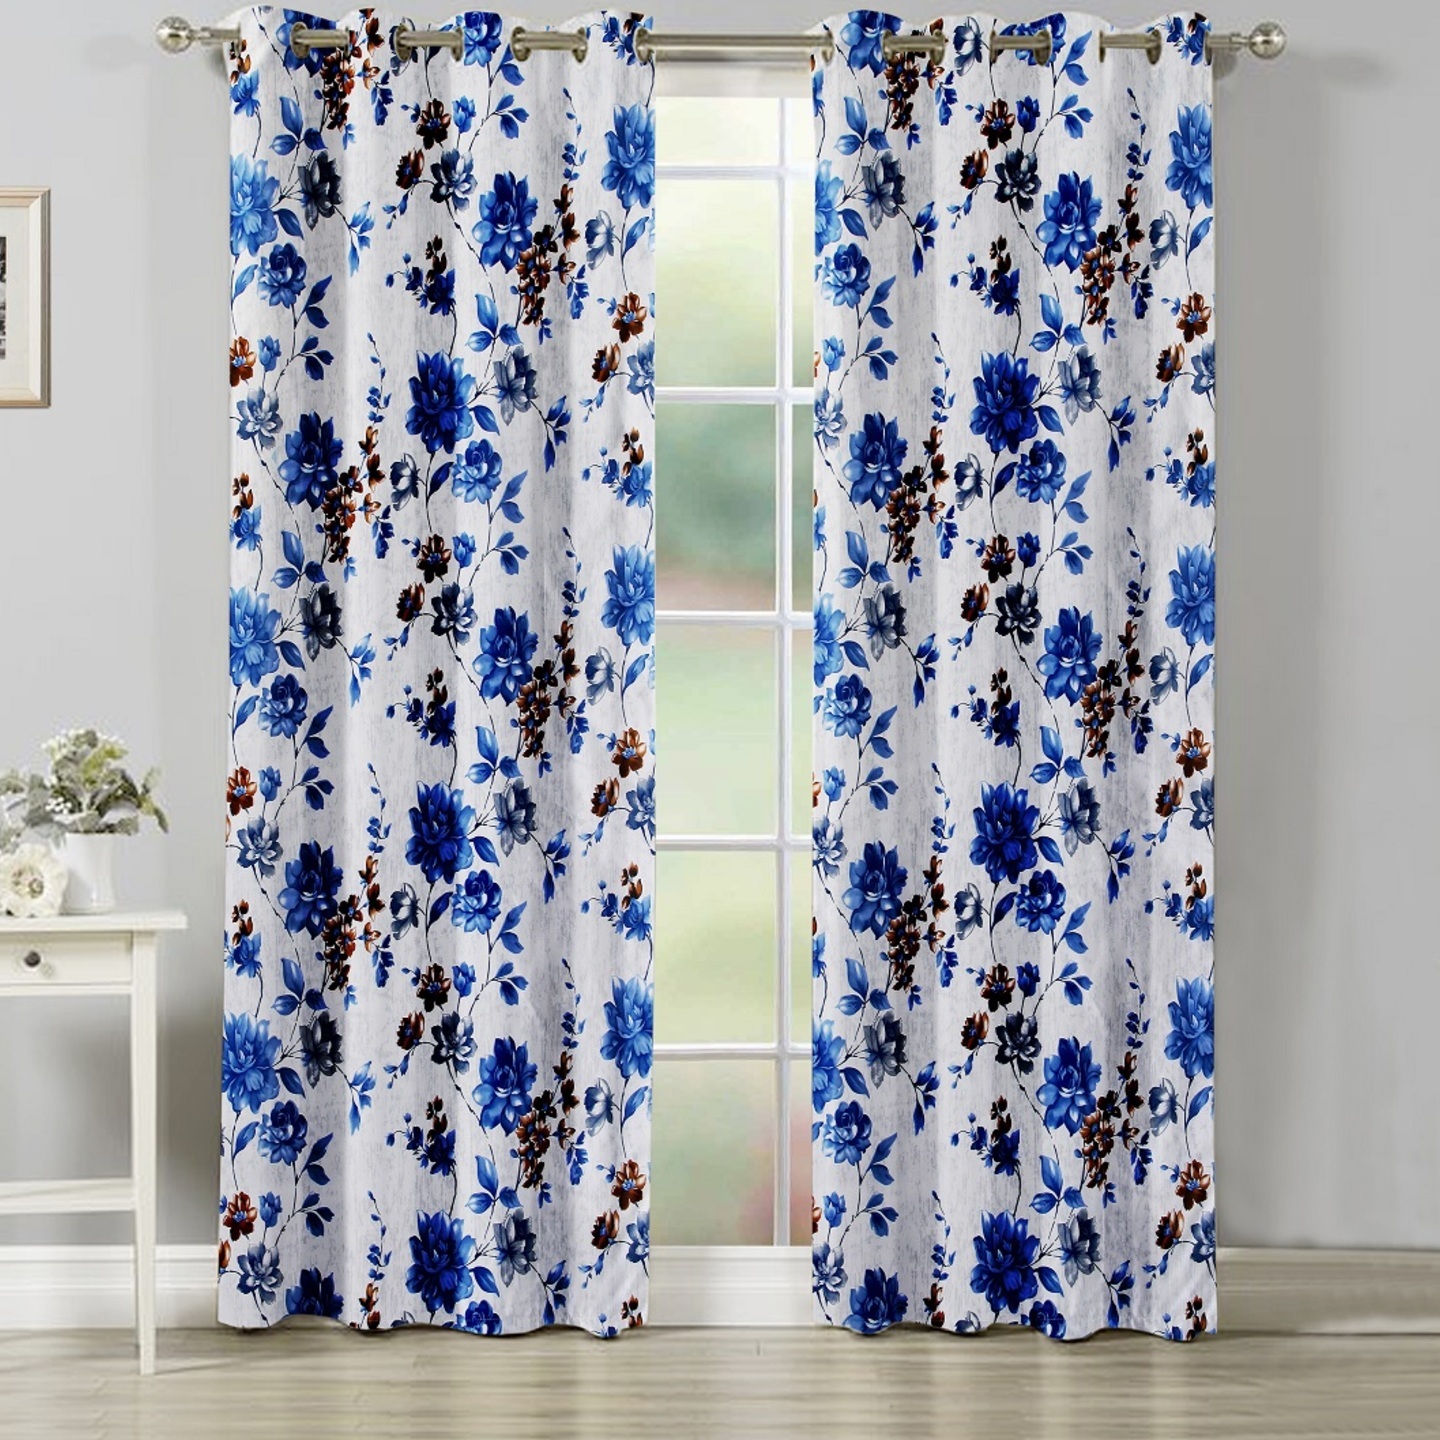 Handtex Home Floral Design Door Curtains 4x9 feet Set of 2 pcs Blue 